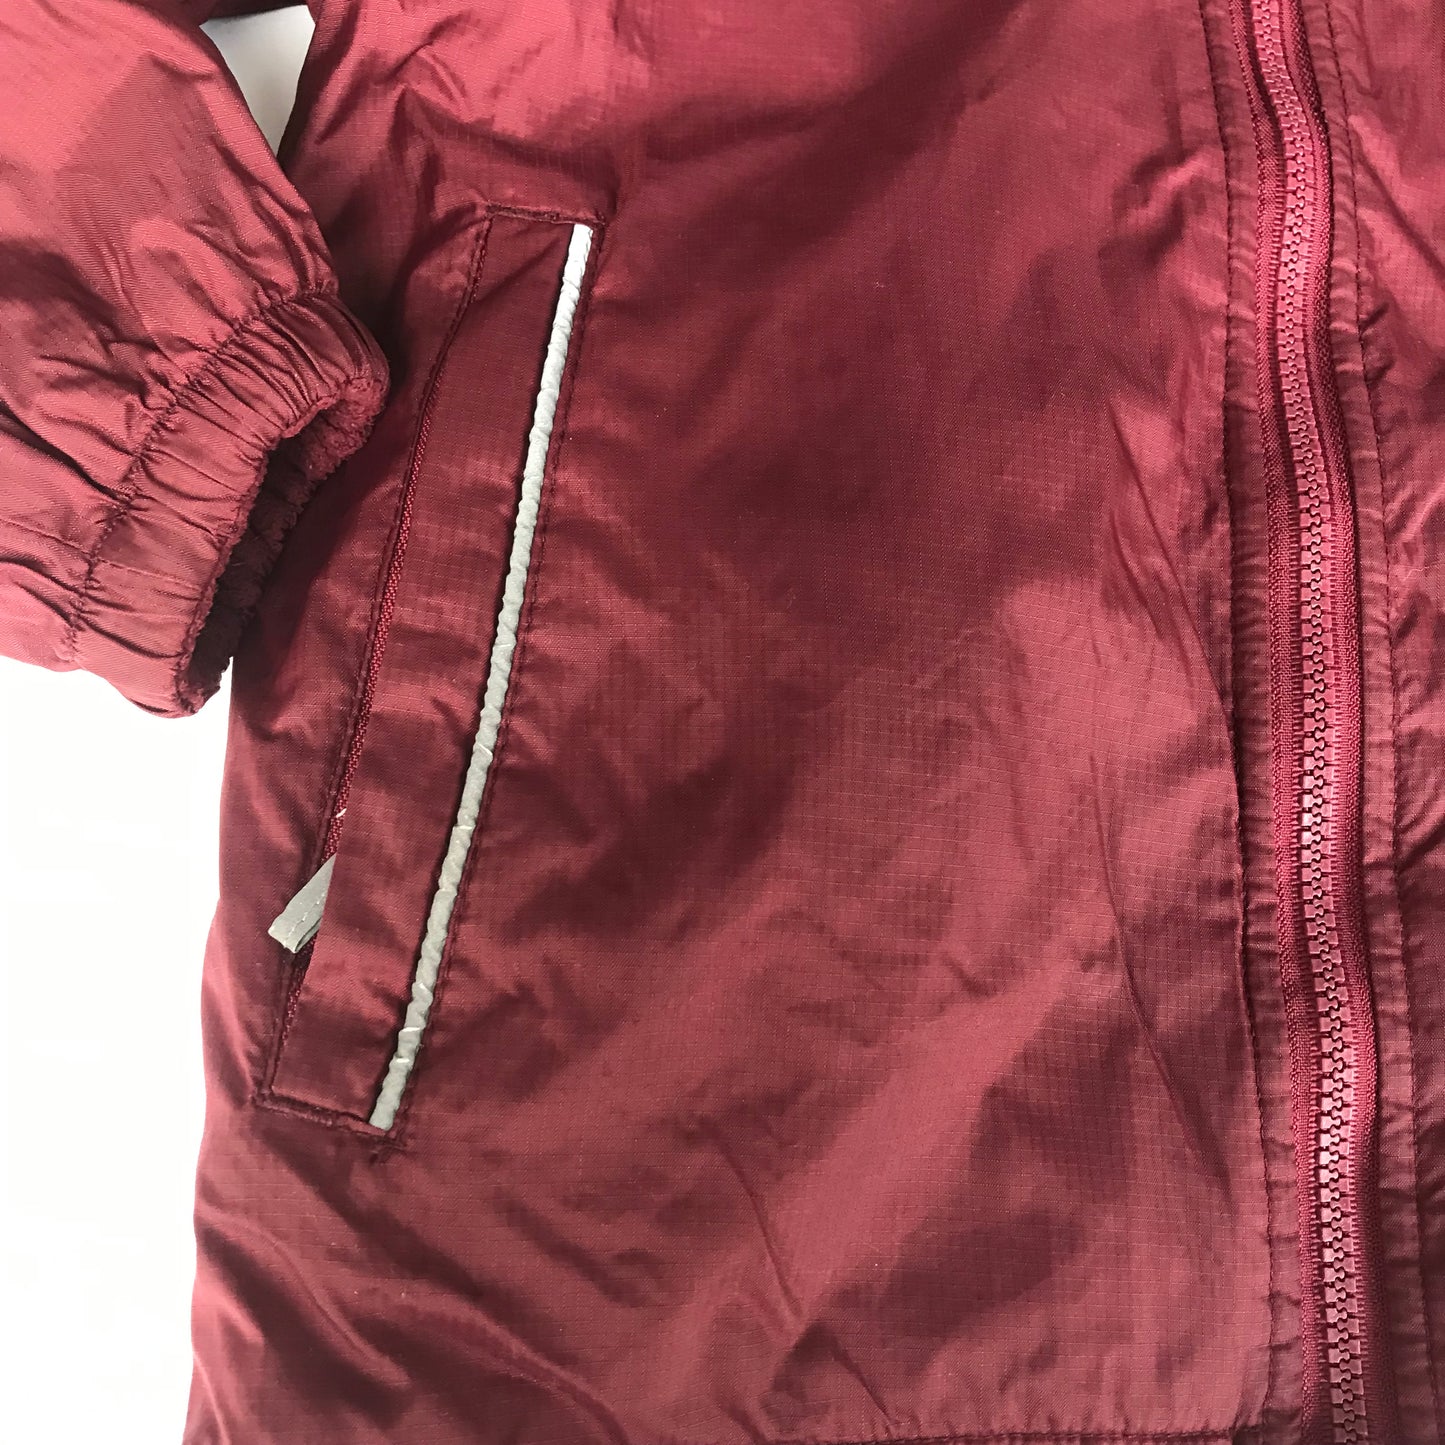 Netherlee Primary Jacket - 61cm/24in